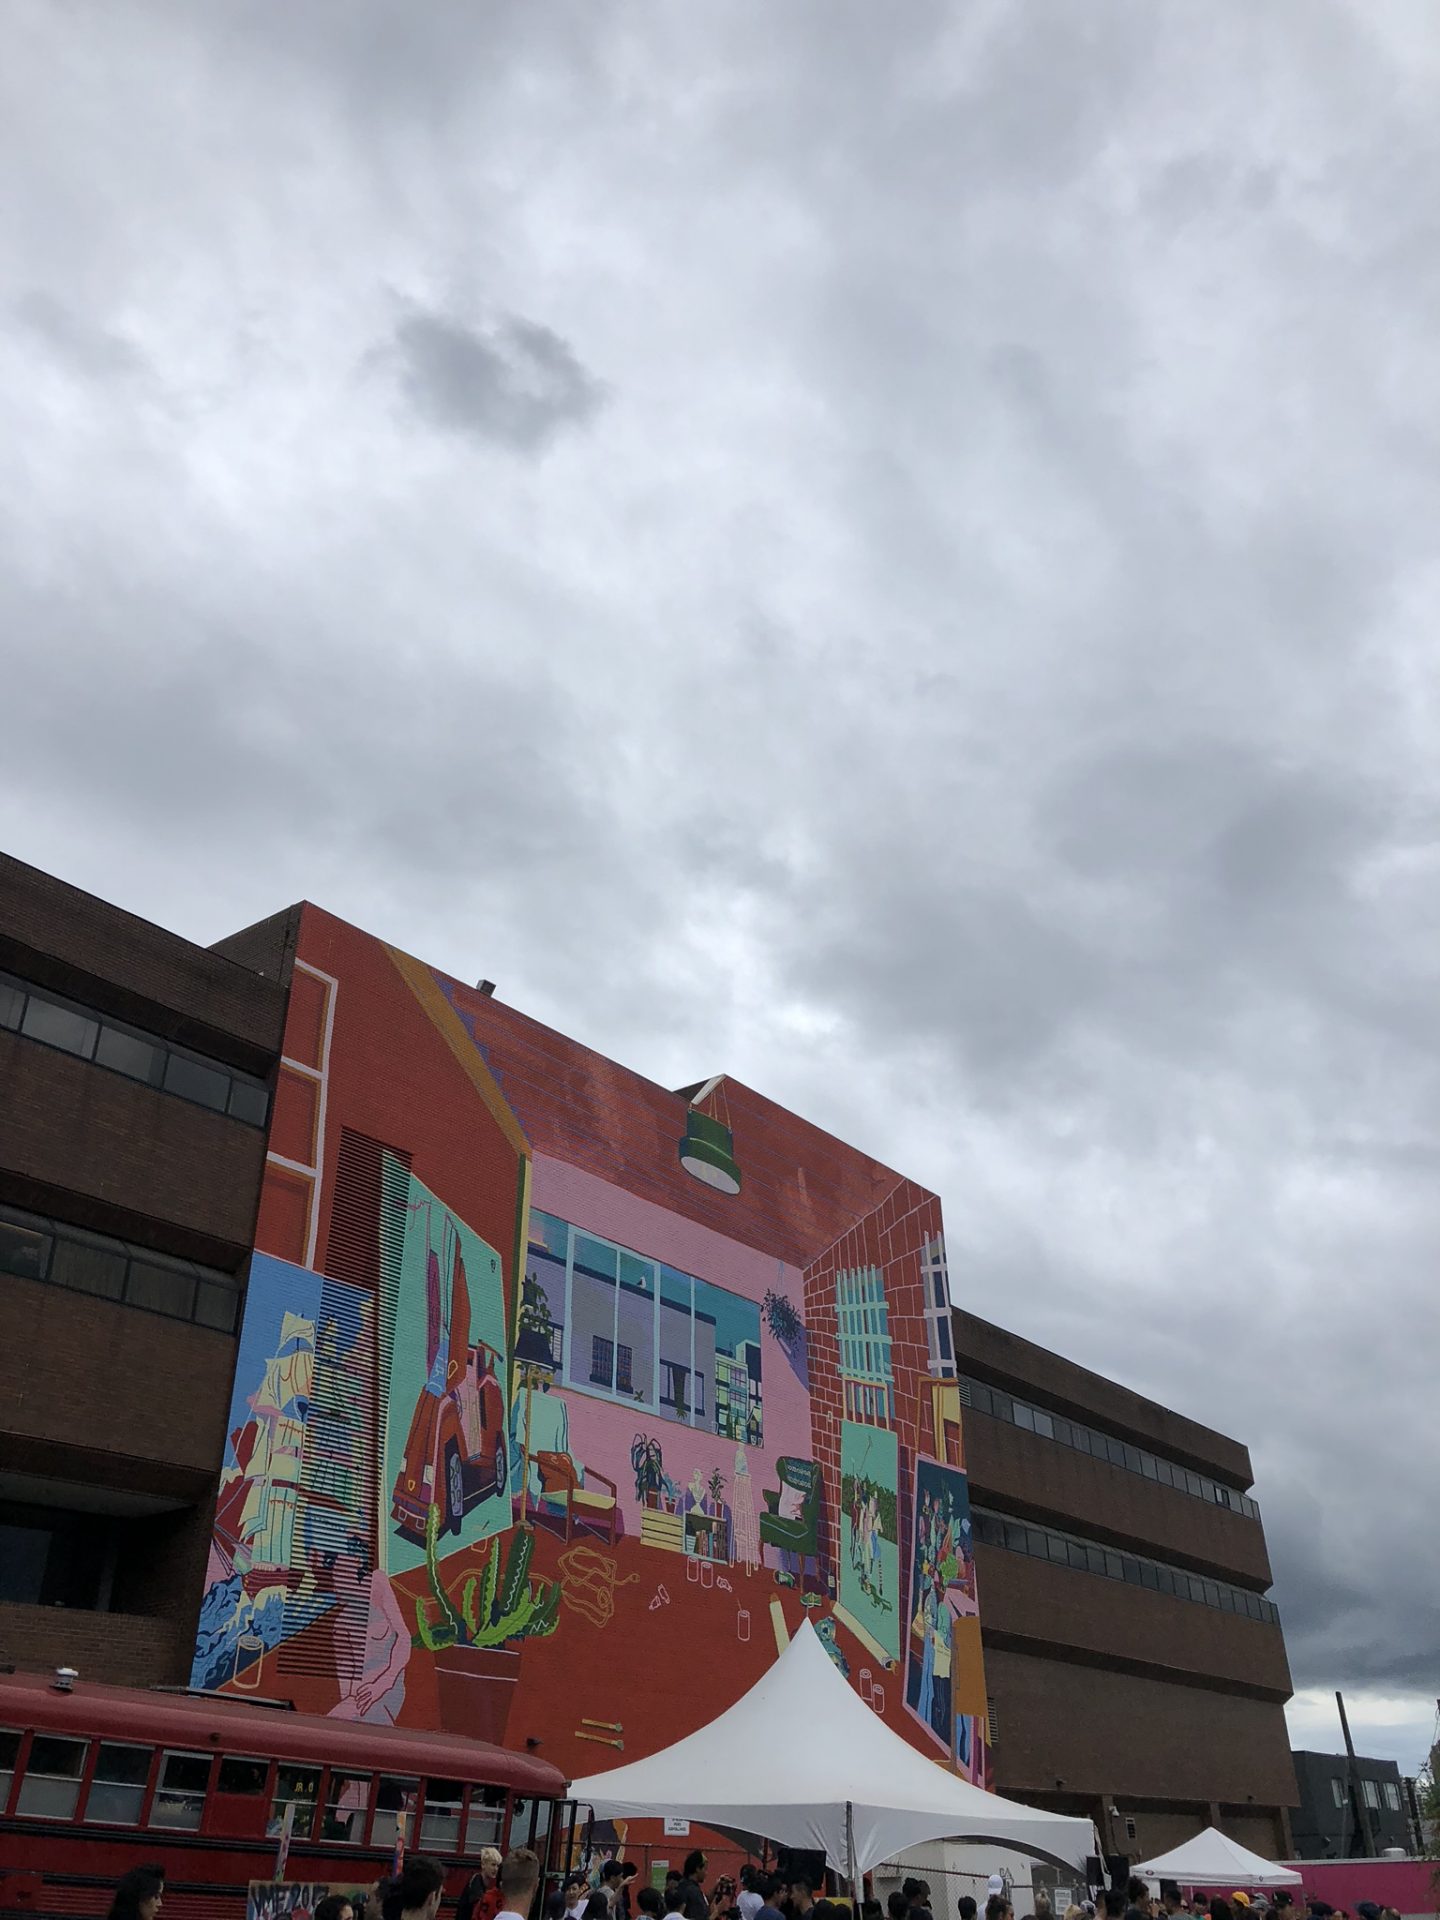 Giant mural at Vancouver Mural Festival